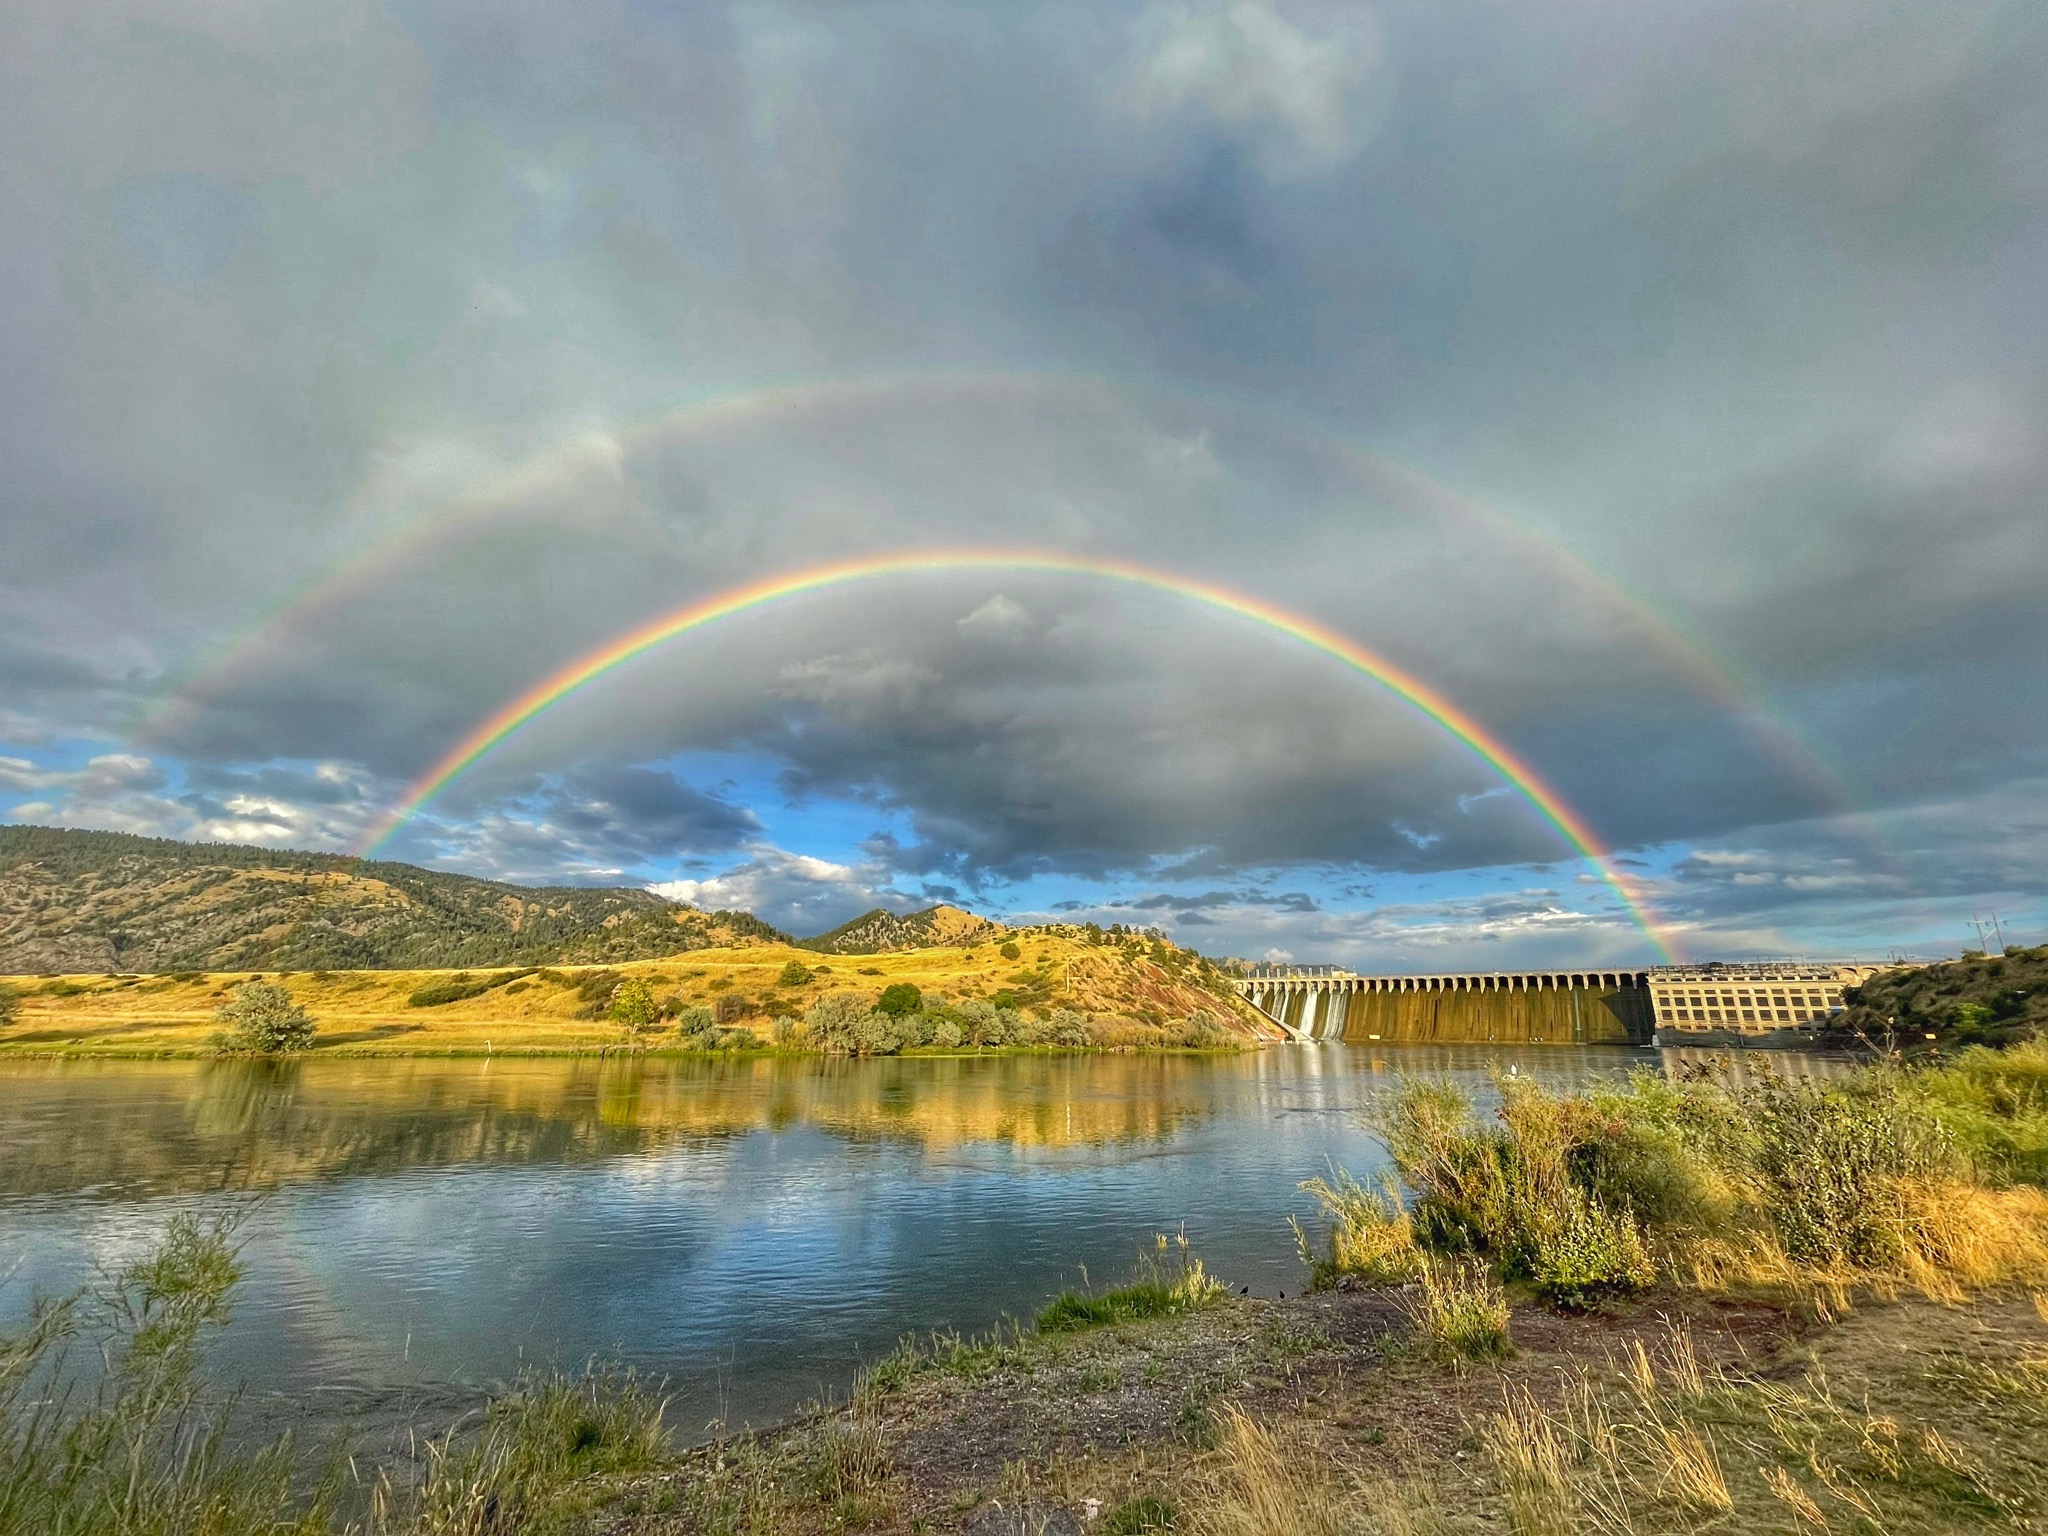 Dam Nice Rainbow Image! Kevin Cumley Image.